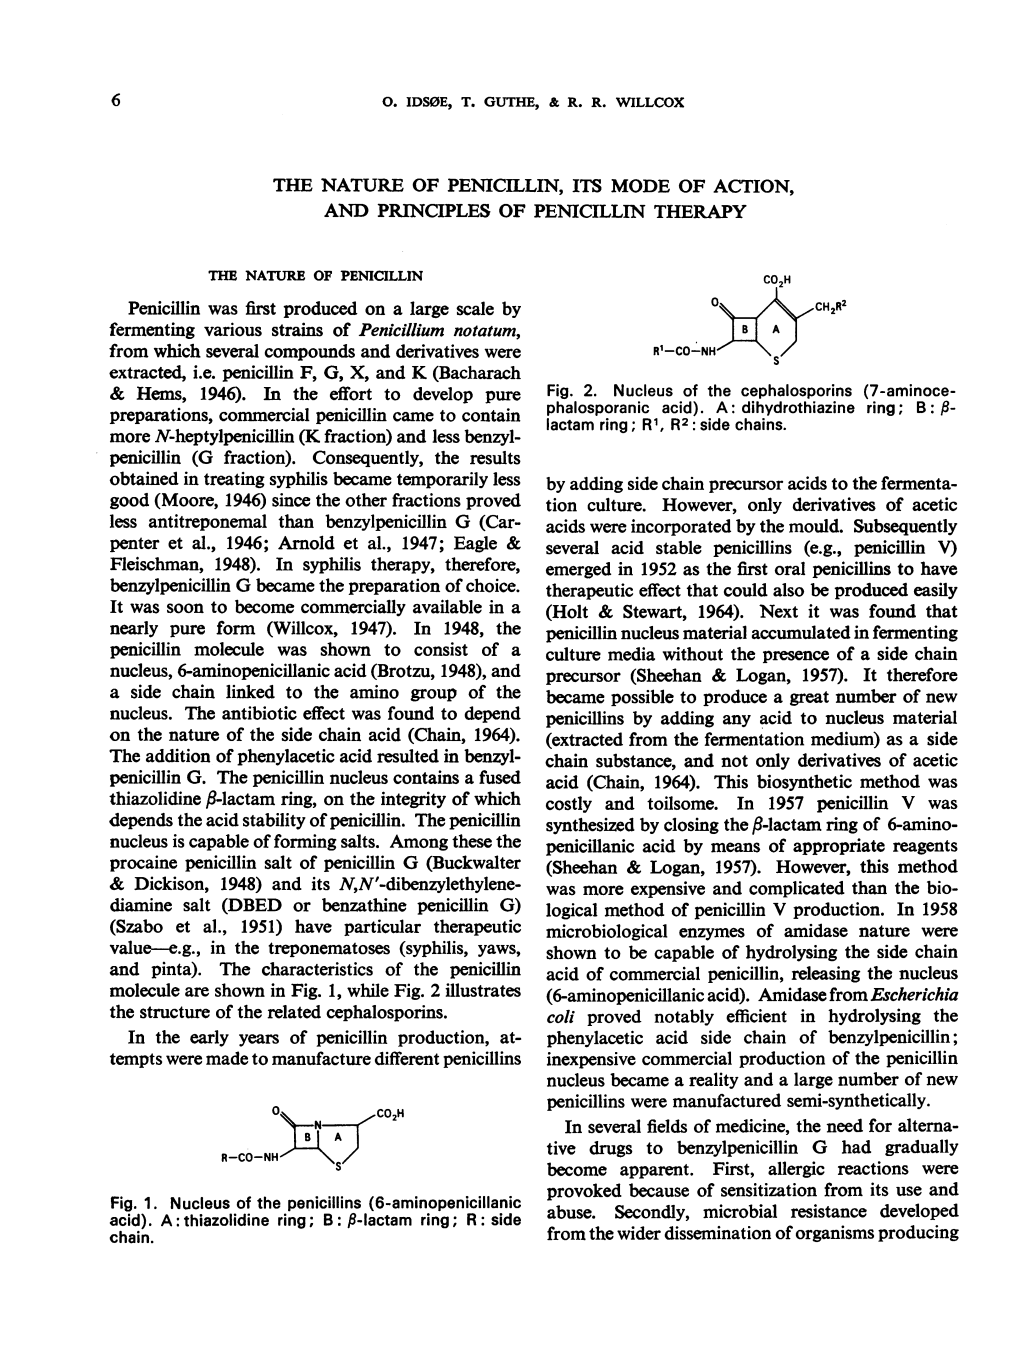 Nucleus, 6-Aminopenicillanic Acid (Brotzu, 1948), and Precursor (Sheehan & Logan, 1957)